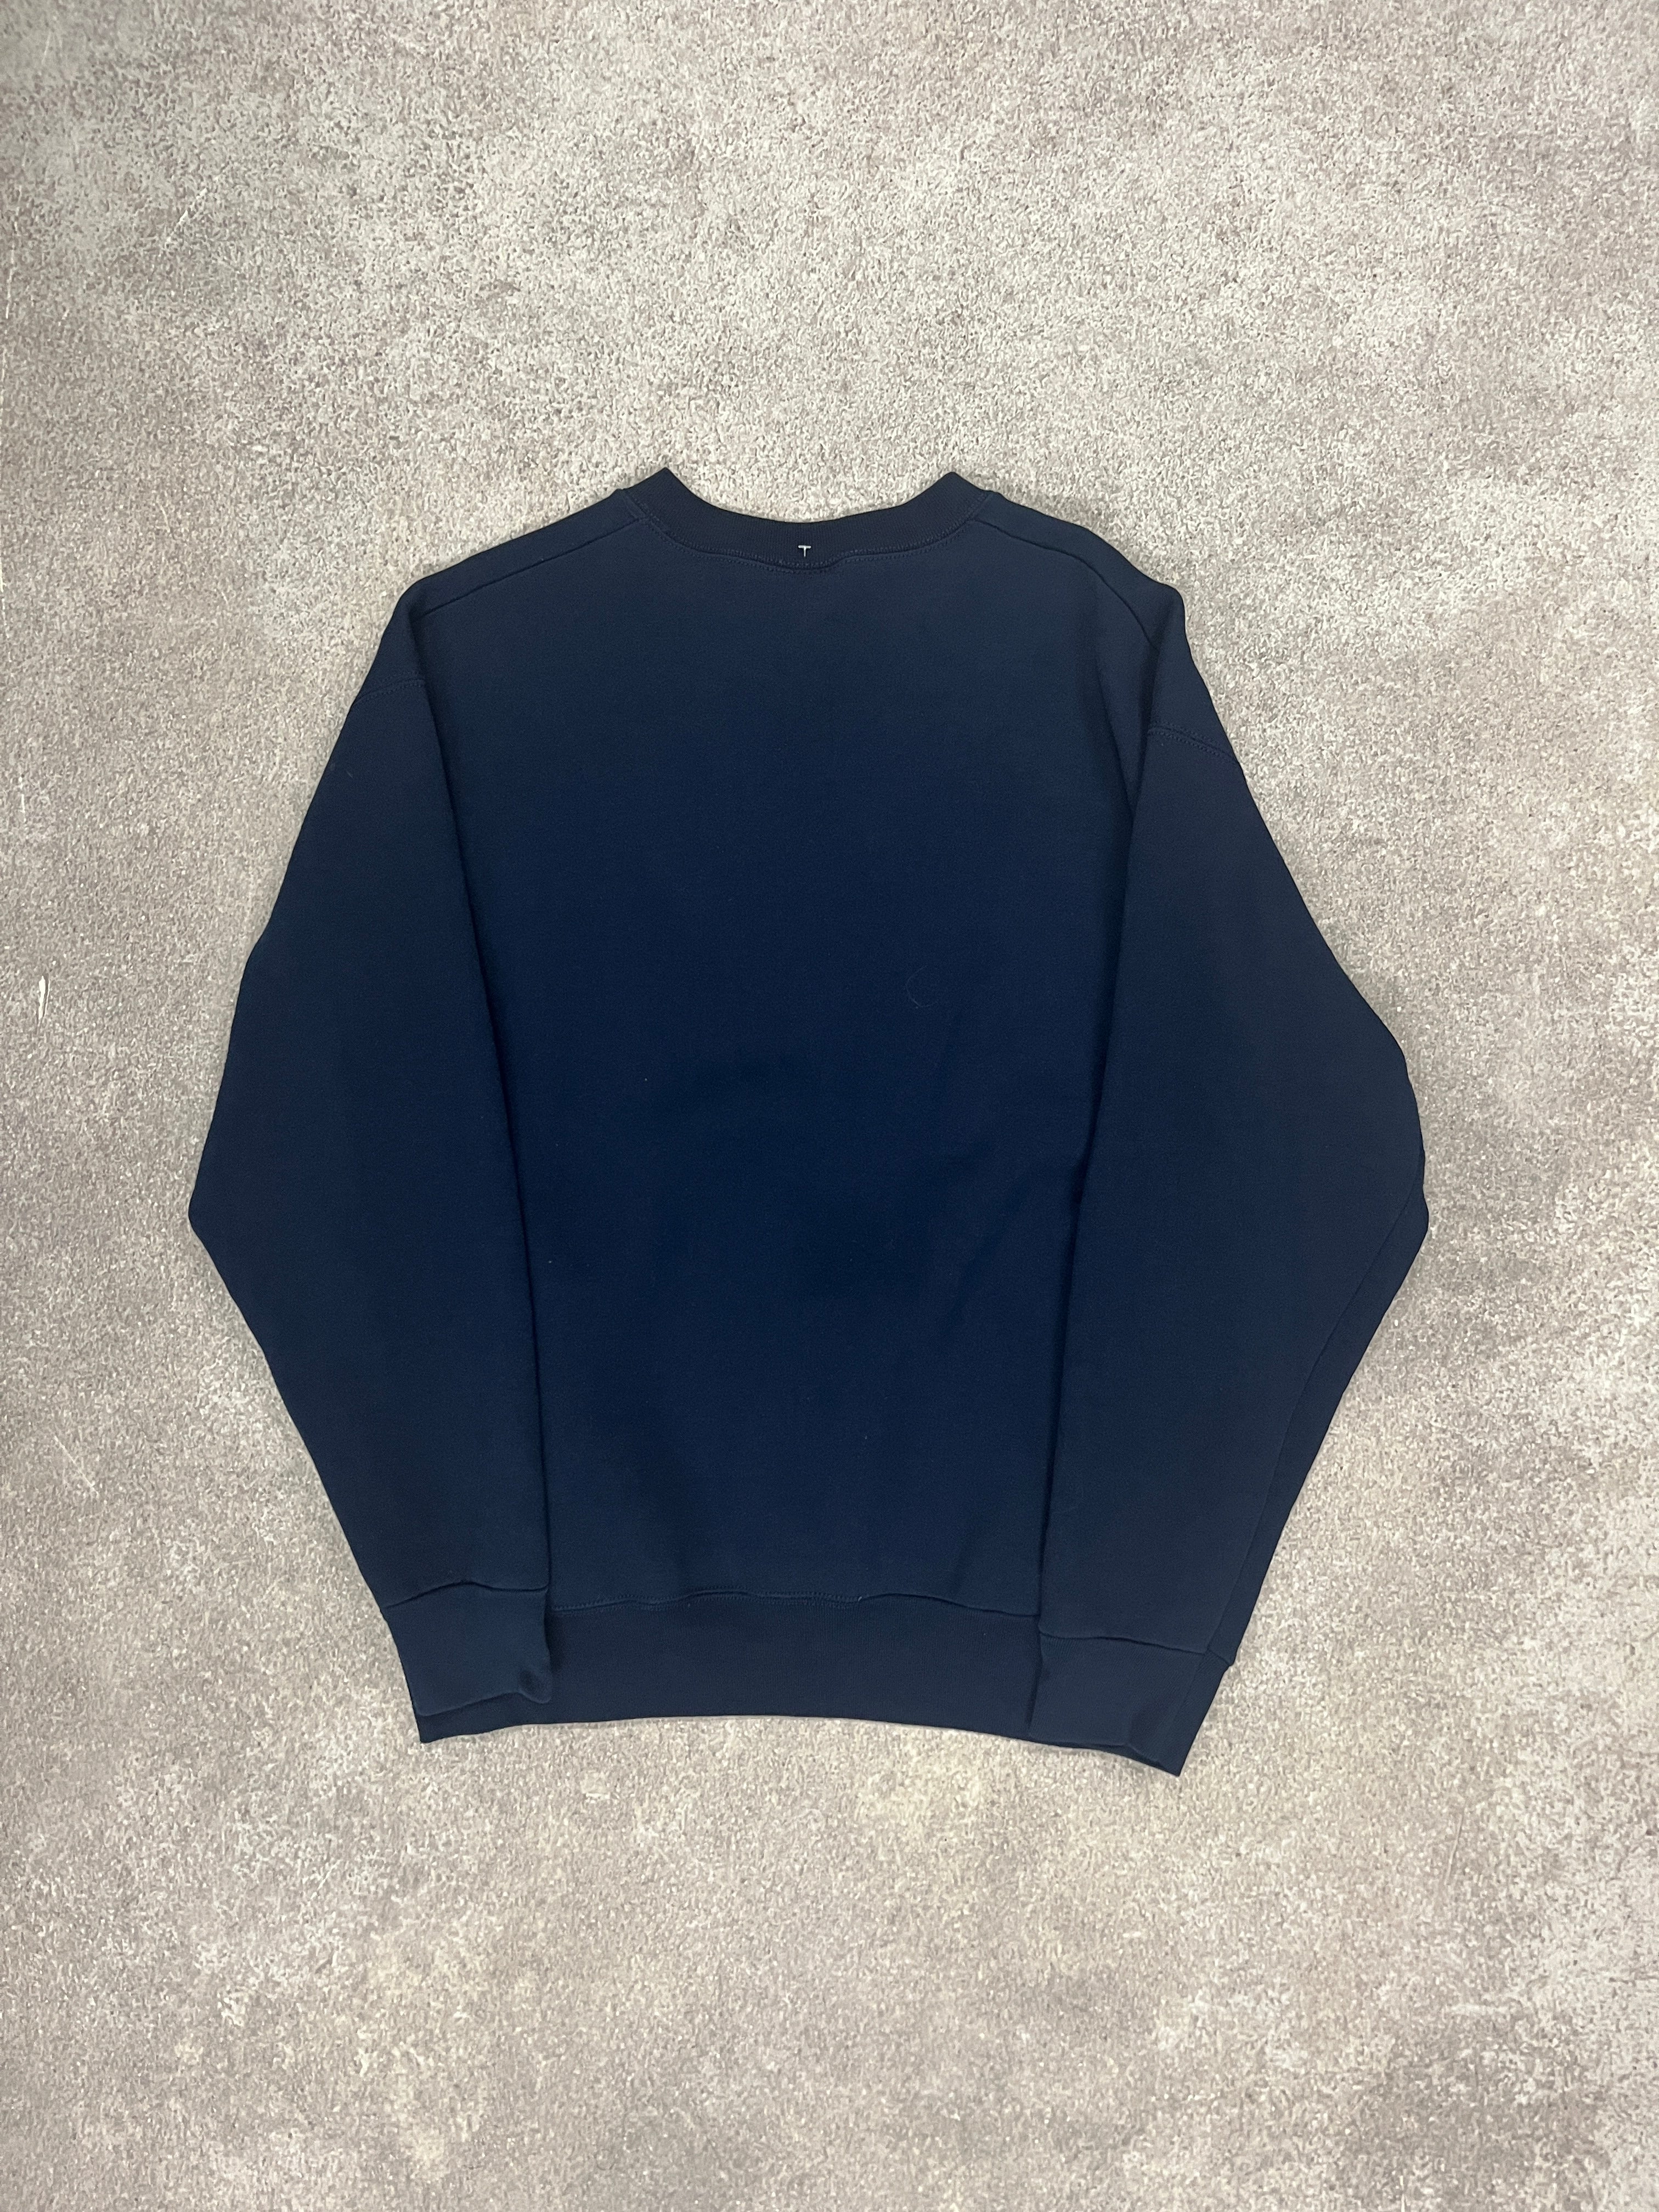 Vintage Blank Sweater Blue // X-Large - RHAGHOUSE VINTAGE